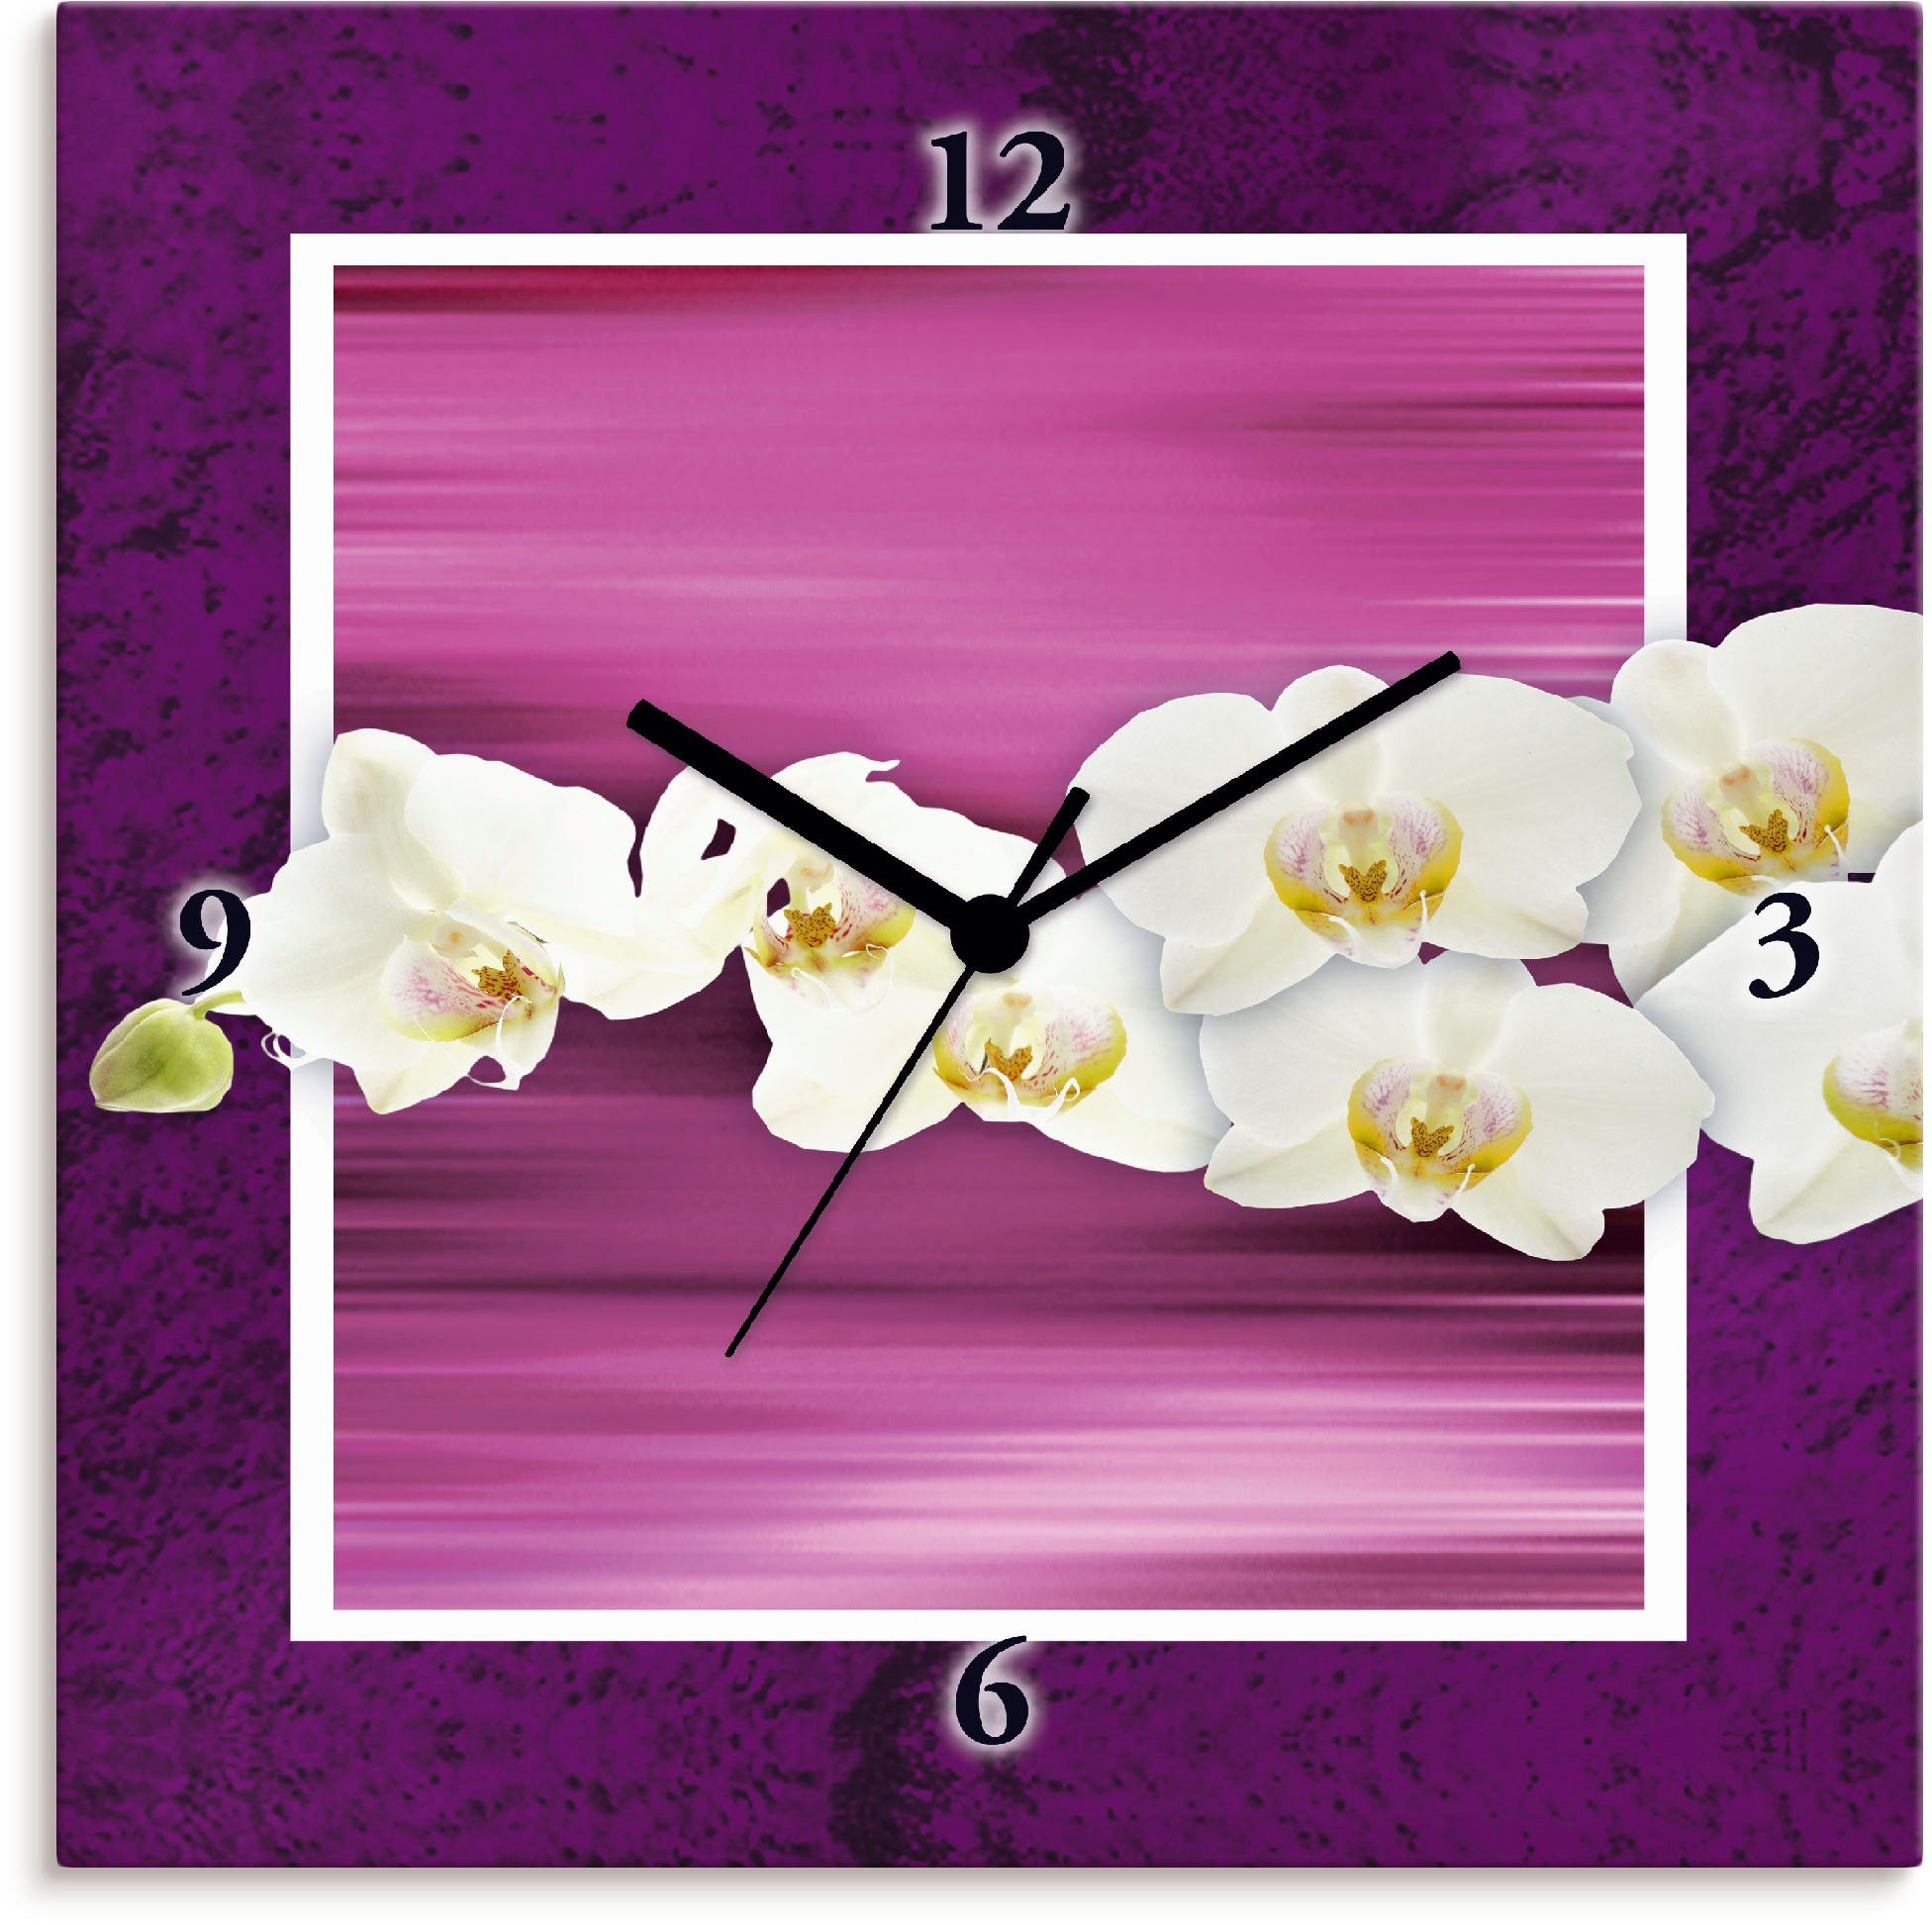 Artland Wanduhr Orchideen - violett (wahlweise mit Quarz- oder Funkuhrwerk, lautlos ohne Tickgeräusche)